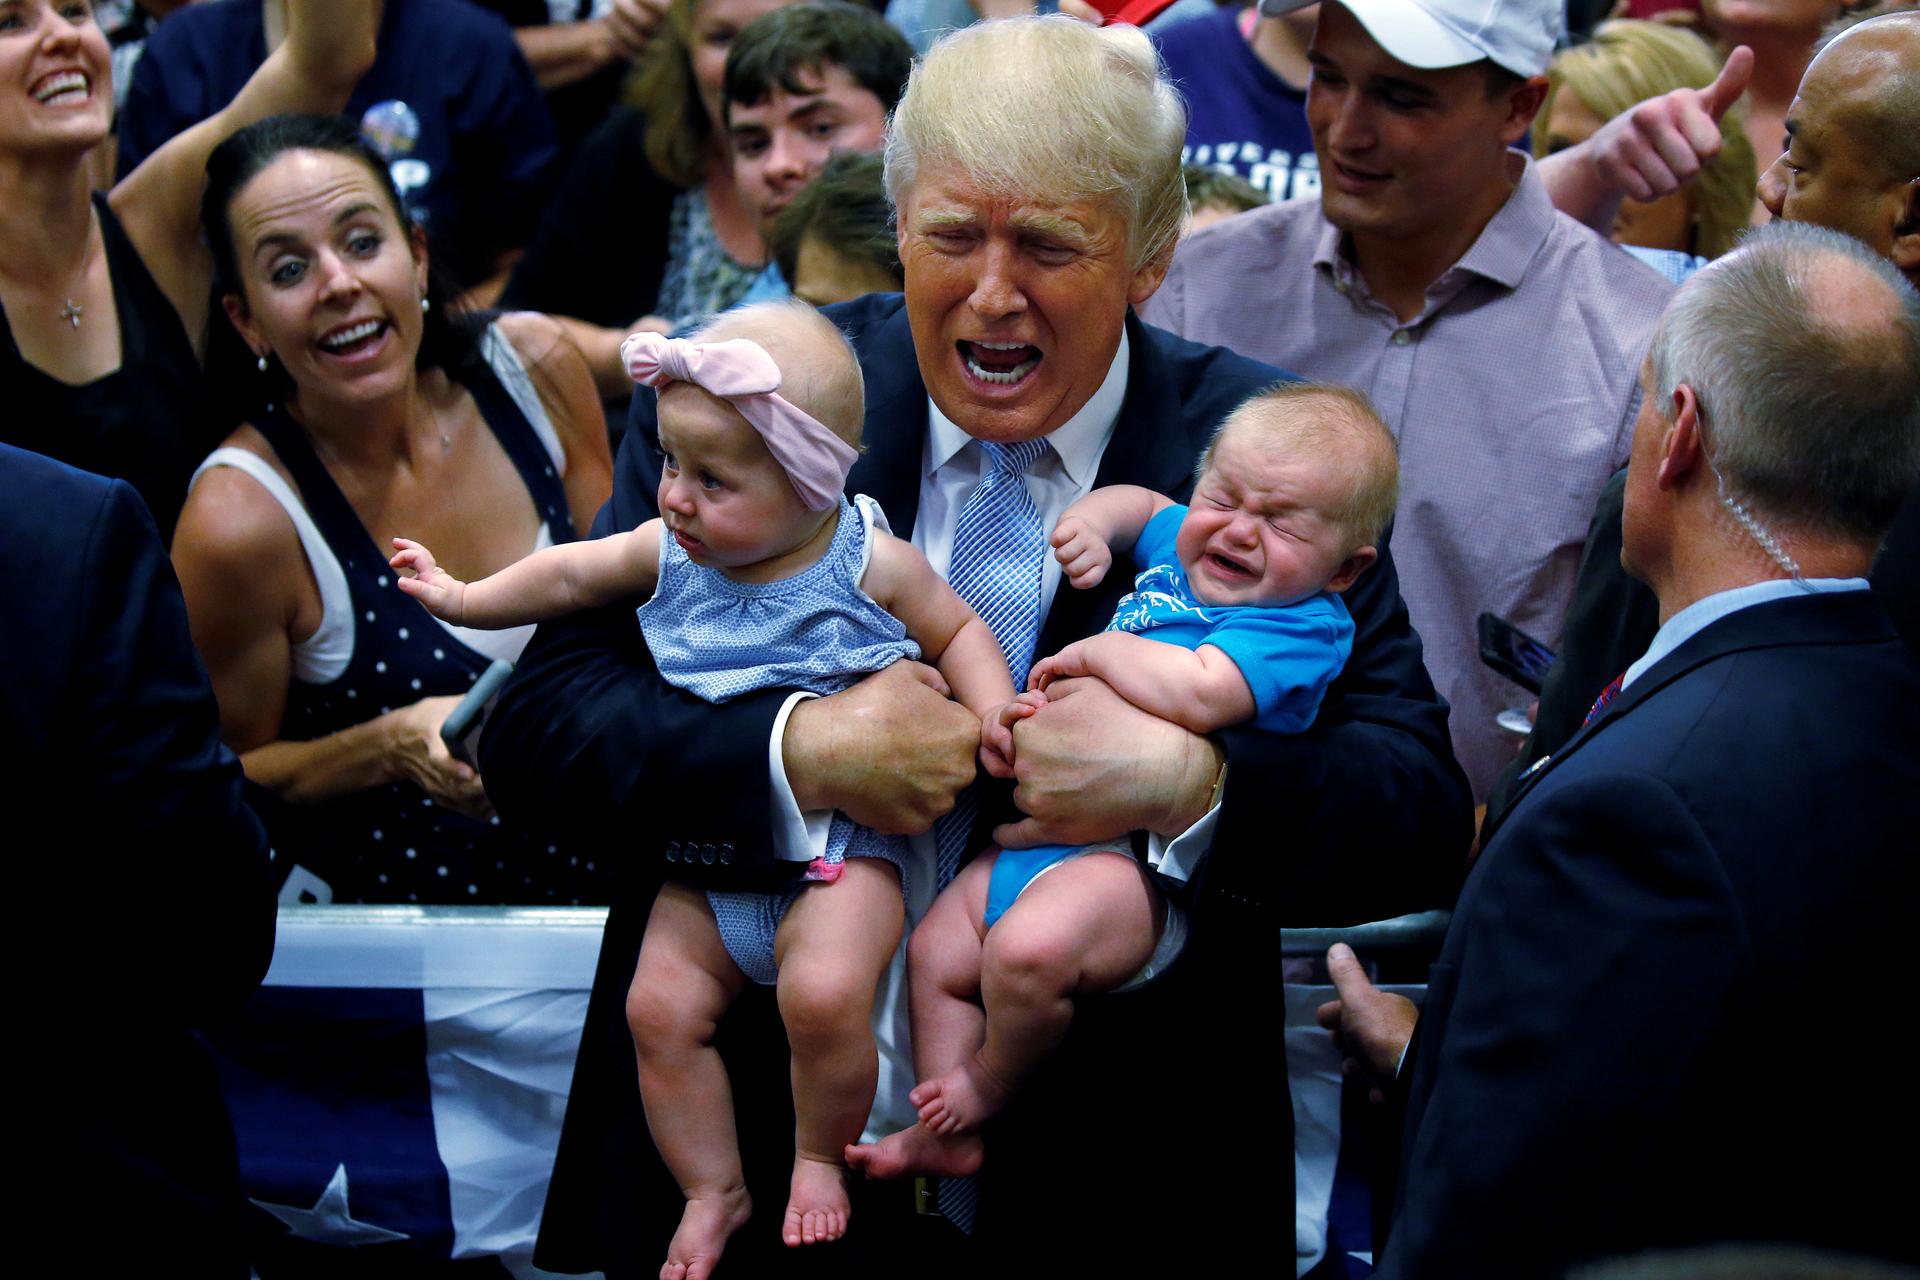 Republican presidential nominee Donald Trump holds babies at a campaign rally in Colorado Springs, Colorado, U.S., July 29, 2016. REUTERS/Carlo Allegri